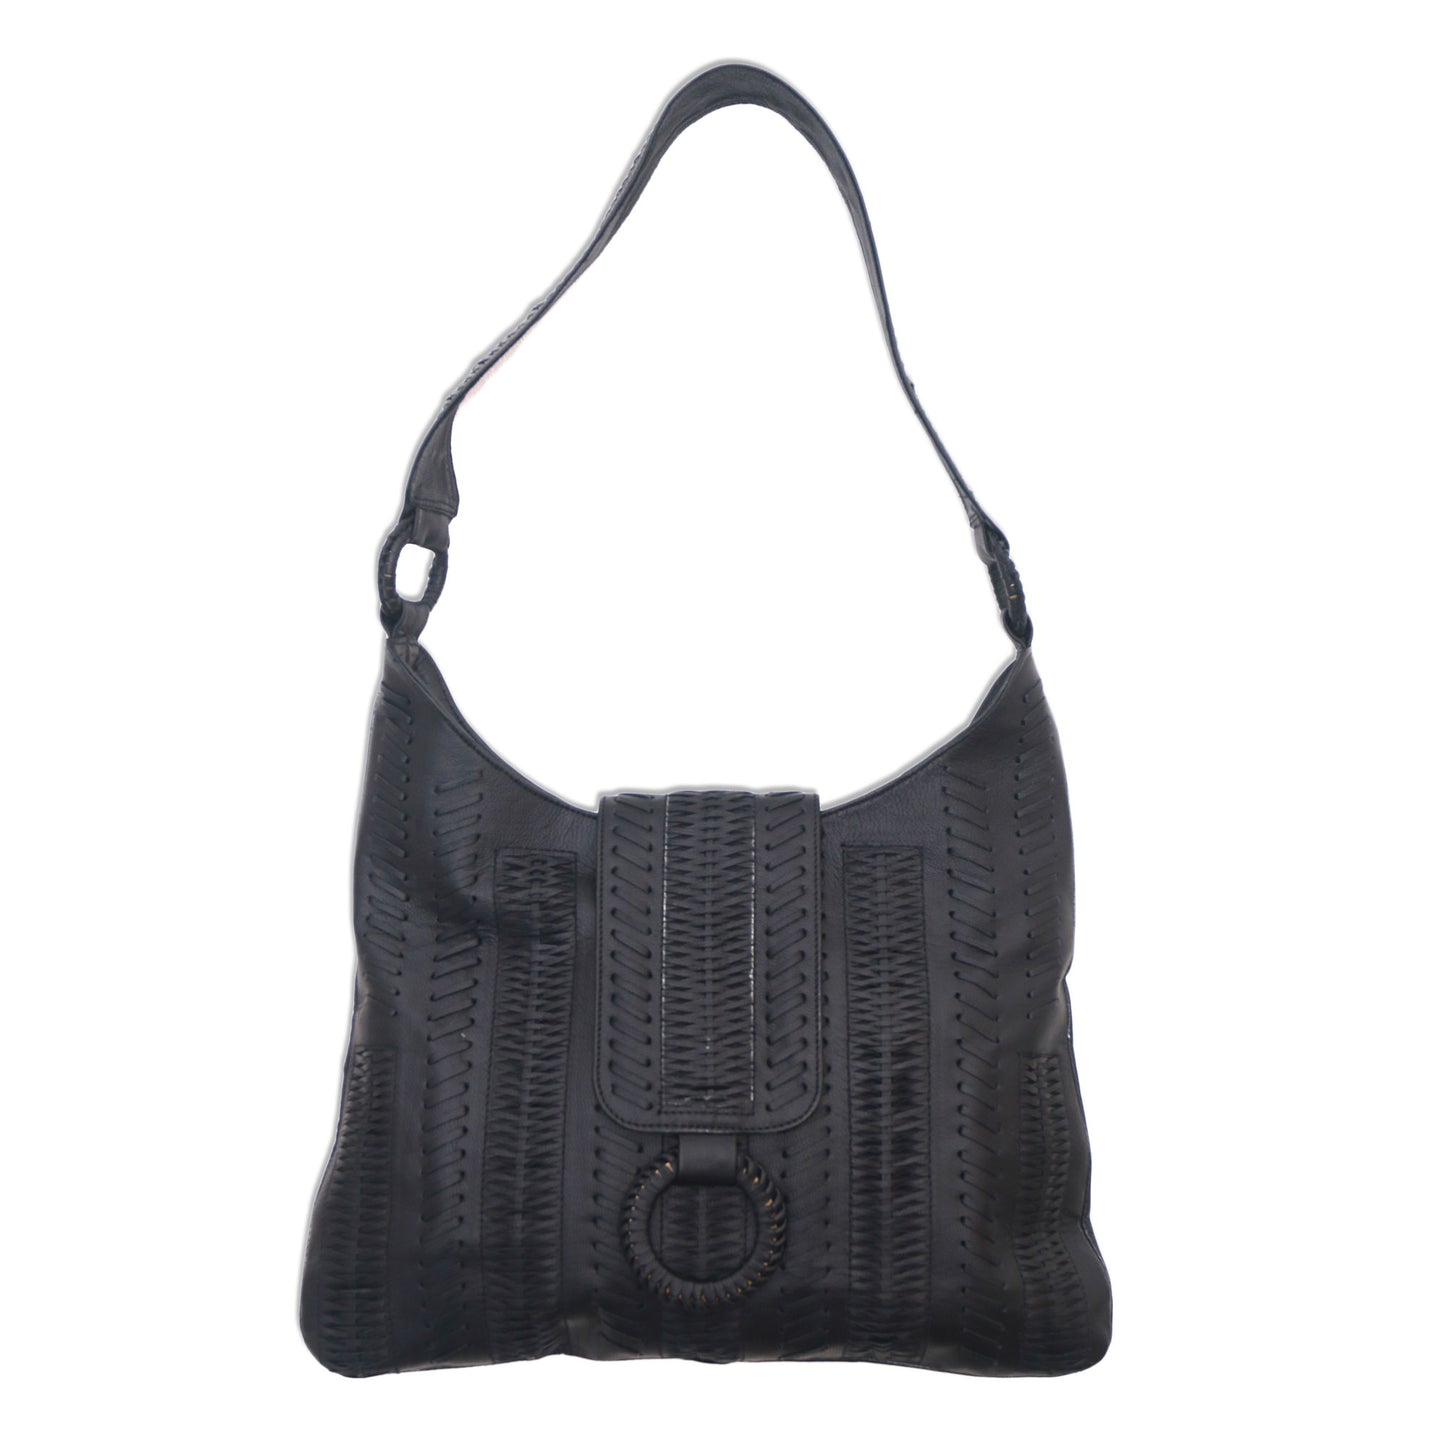 Onyx Anyaman Patterned Leather Hobo Handbag in Onyx from Bali